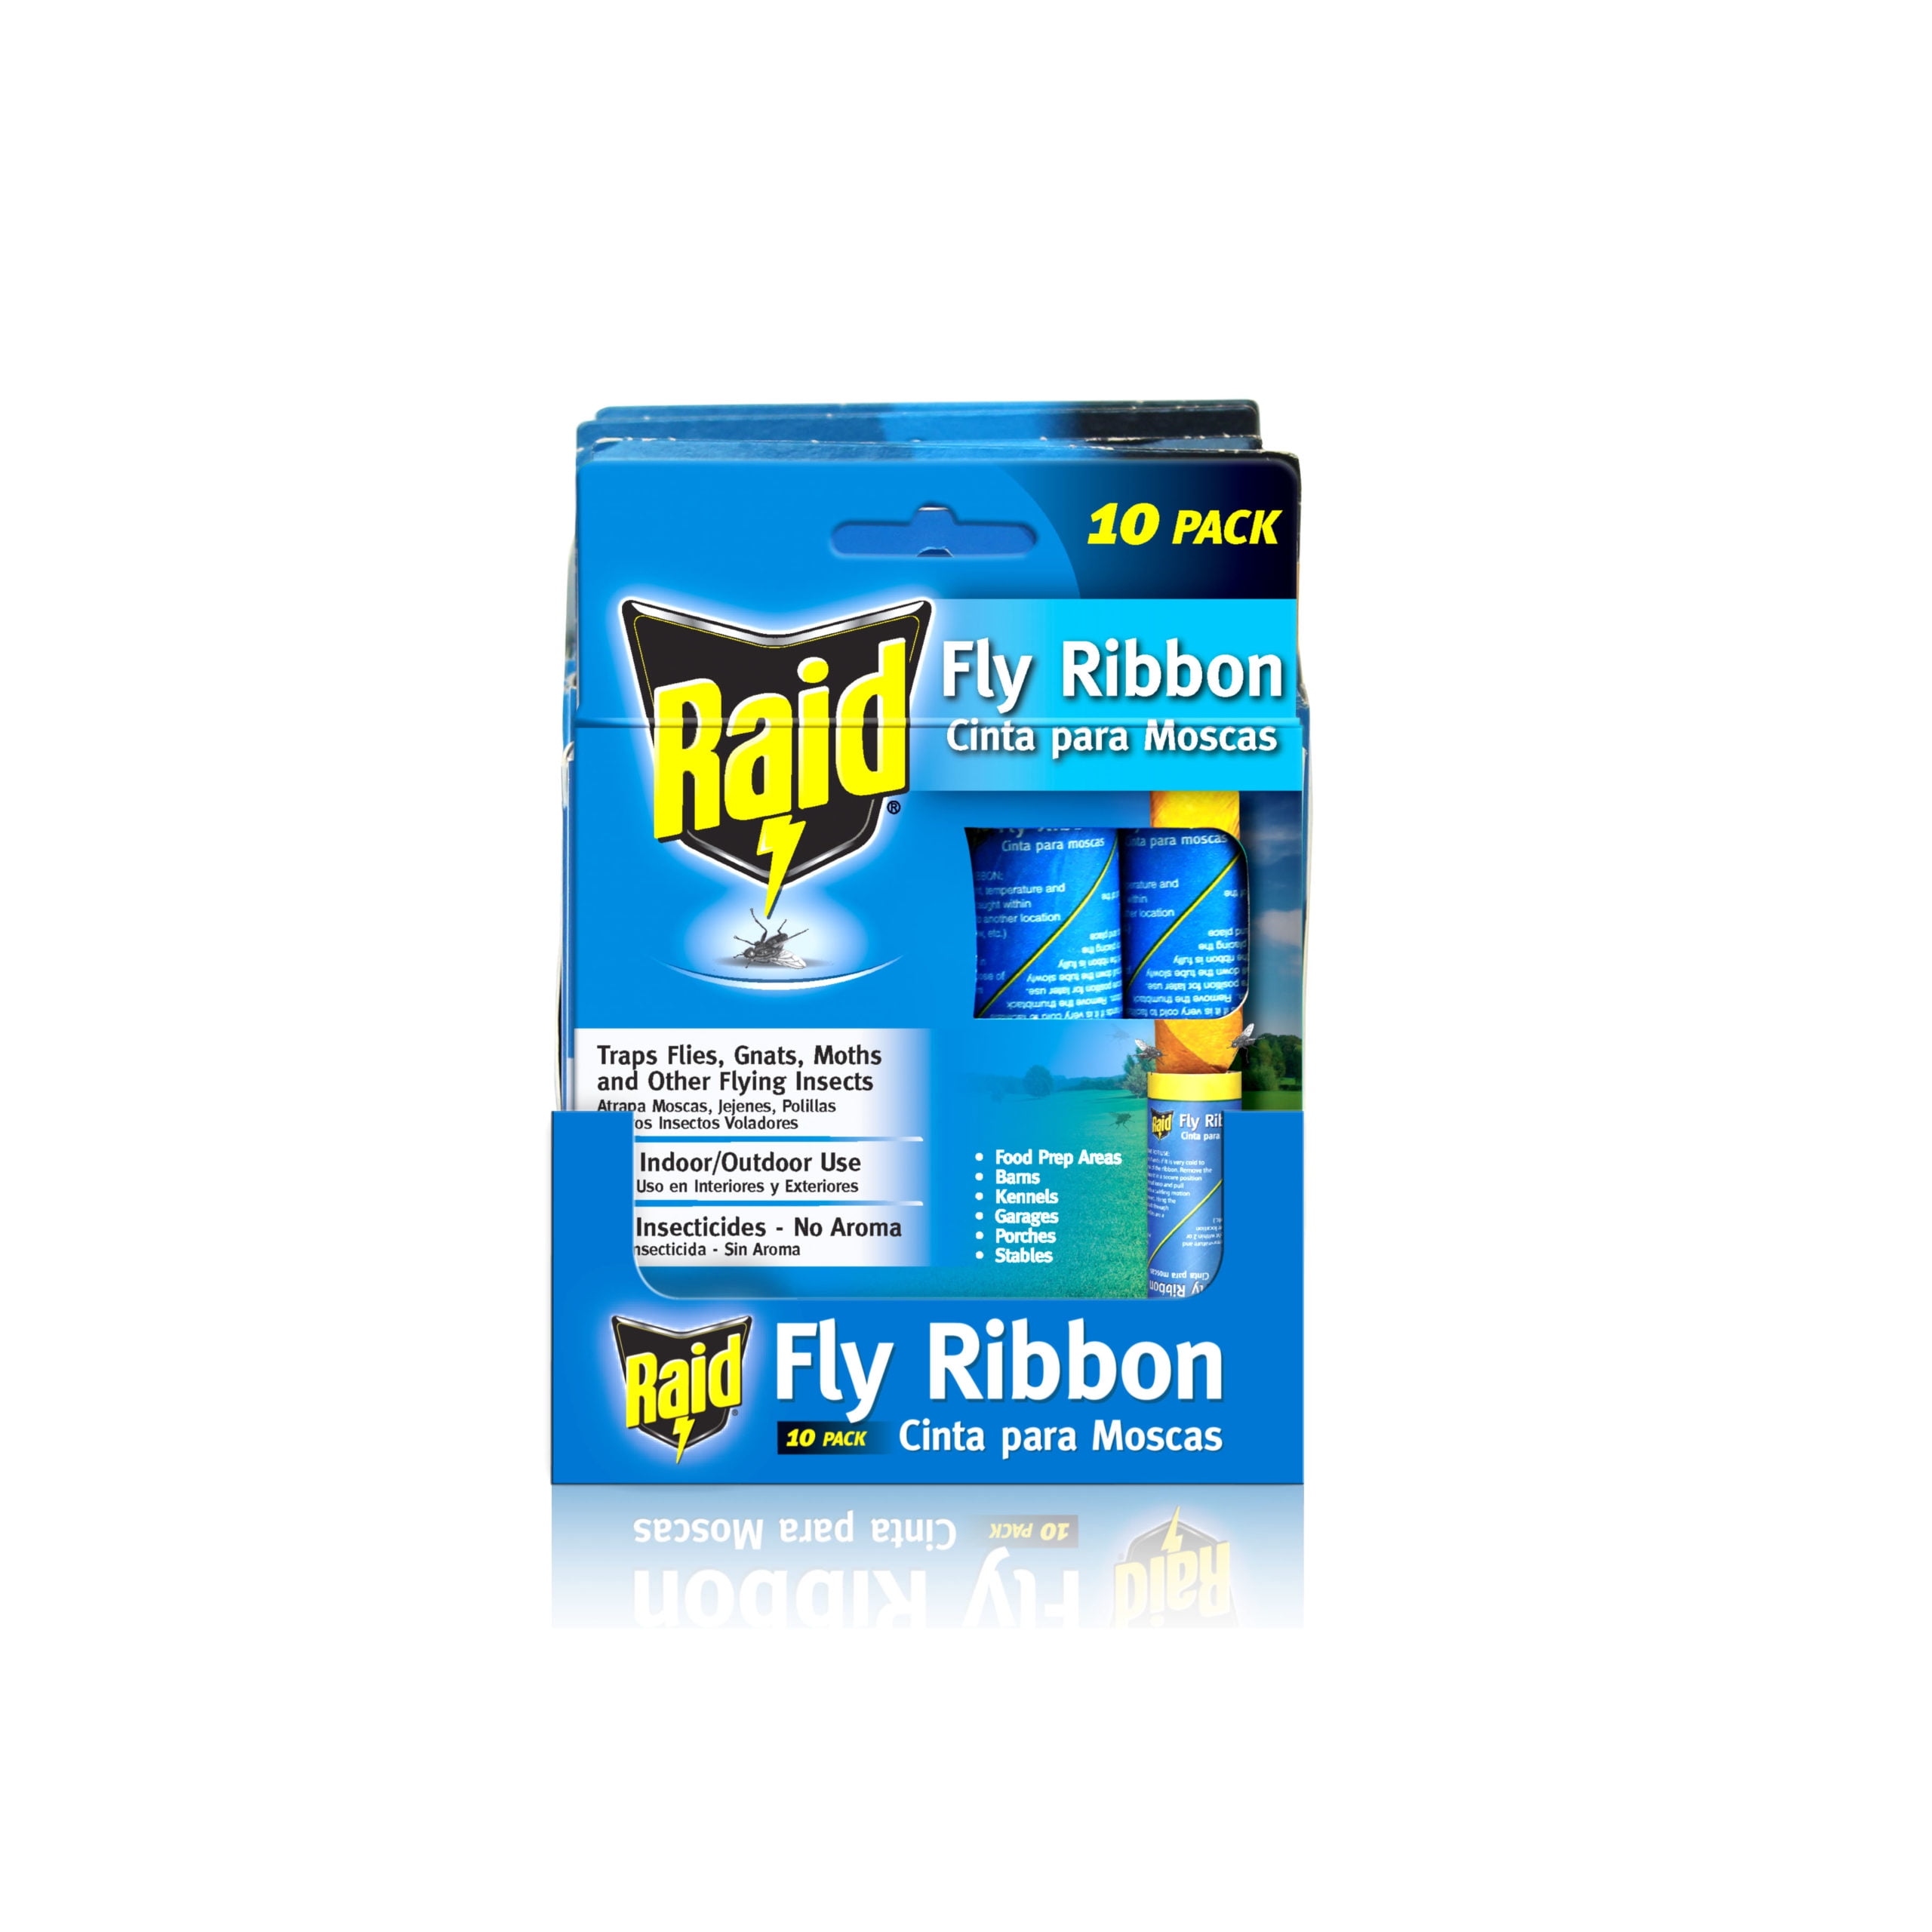 Raid Fly Ribbon 10 Count Review 